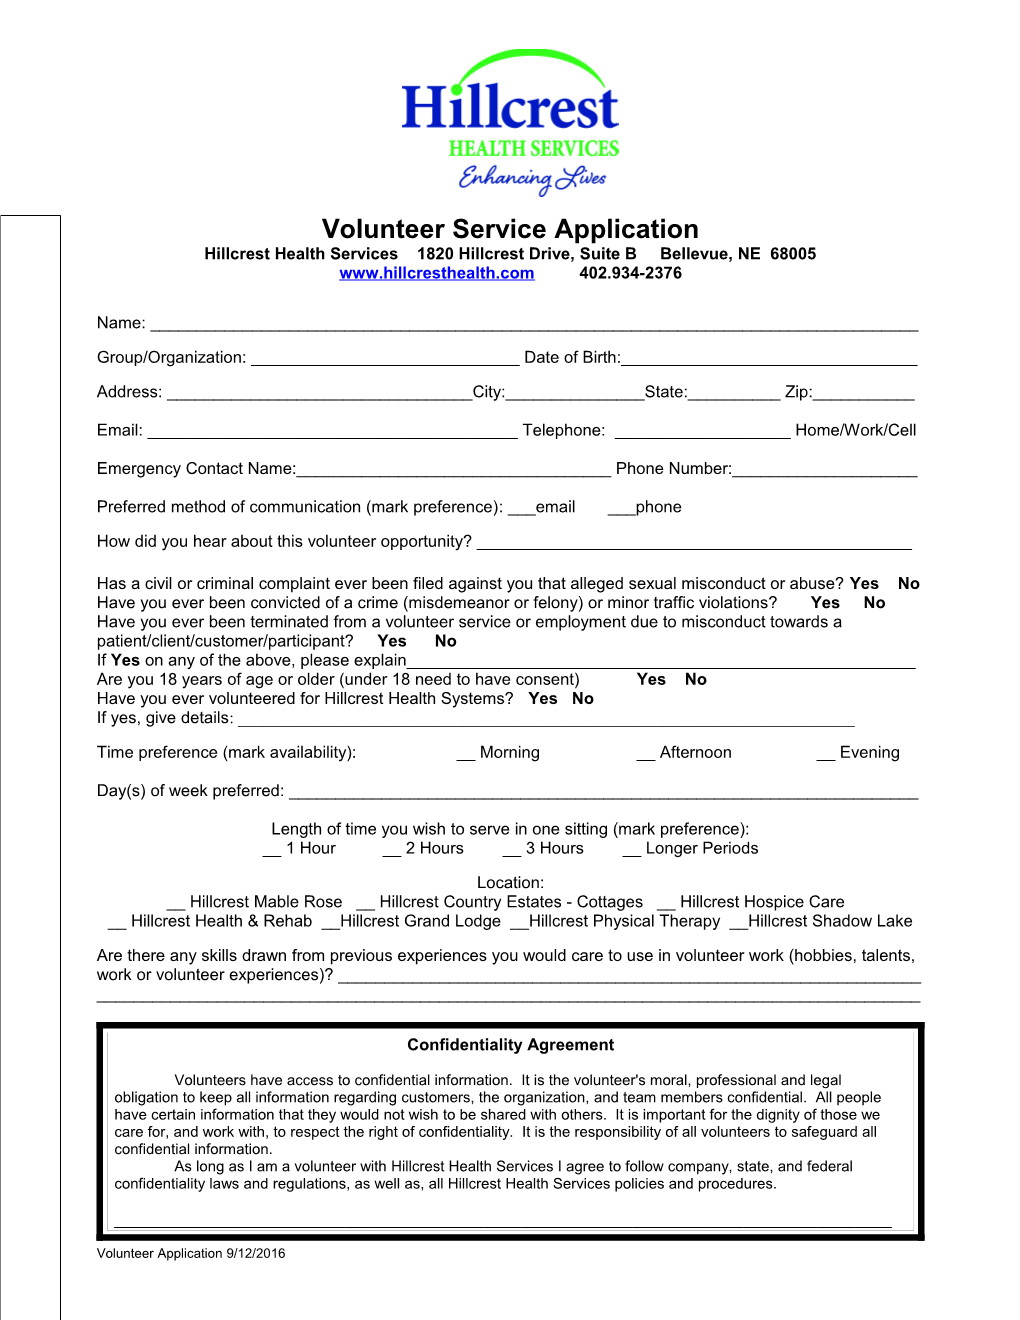 Volunteer Service Questionnaire